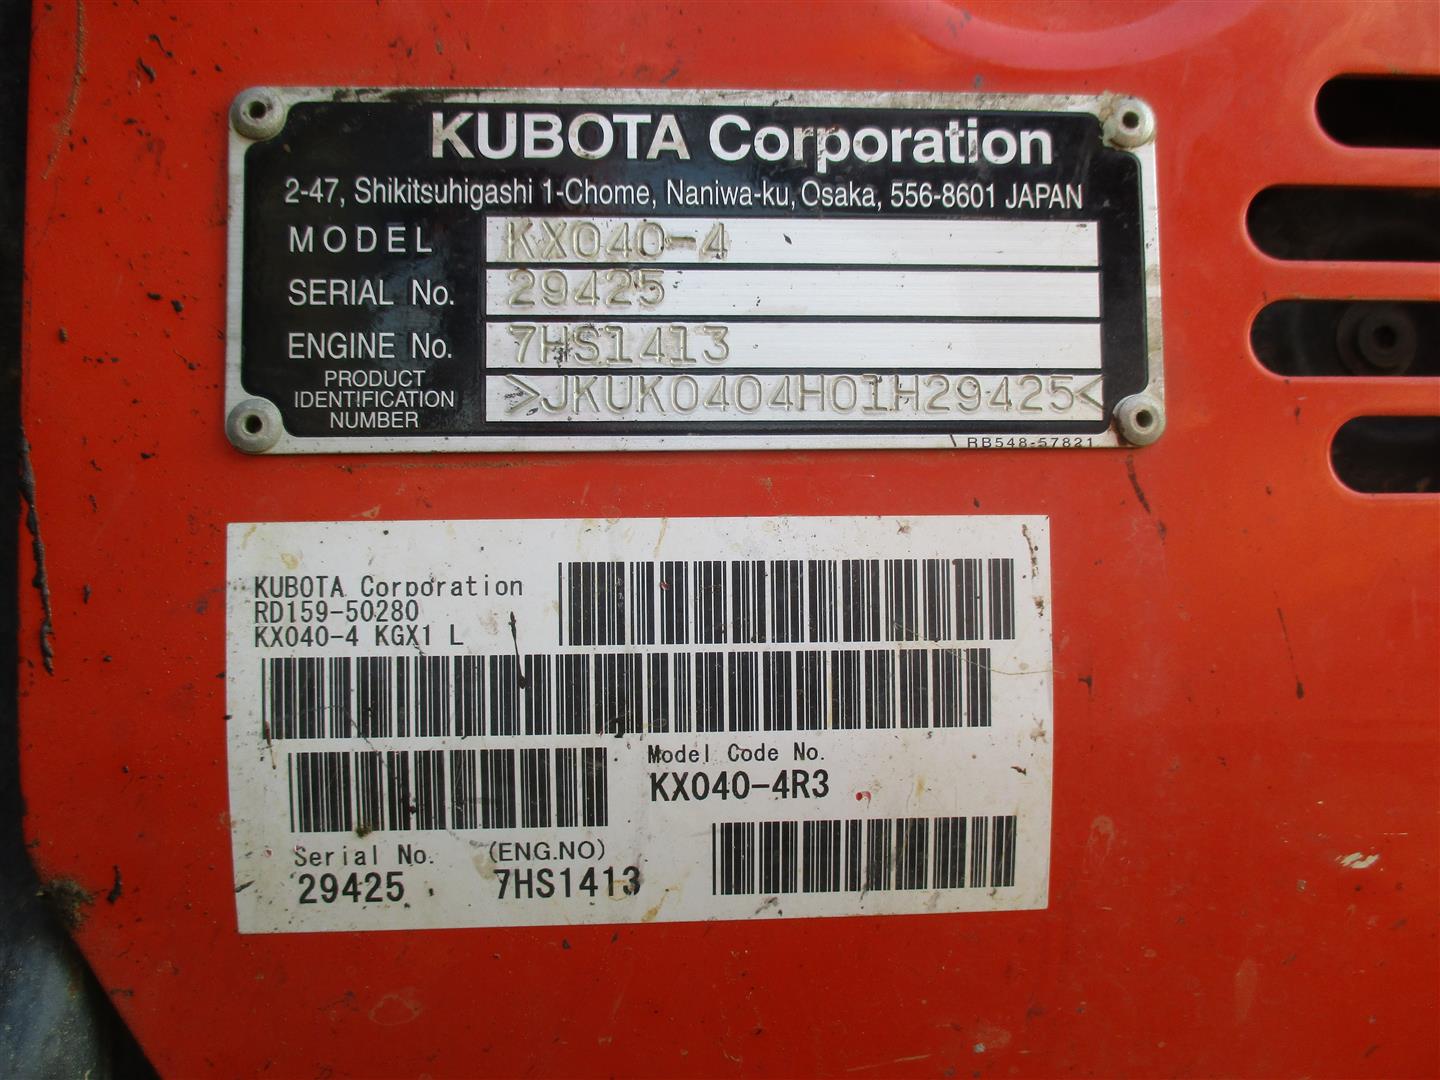 Kubota KX040-4R3